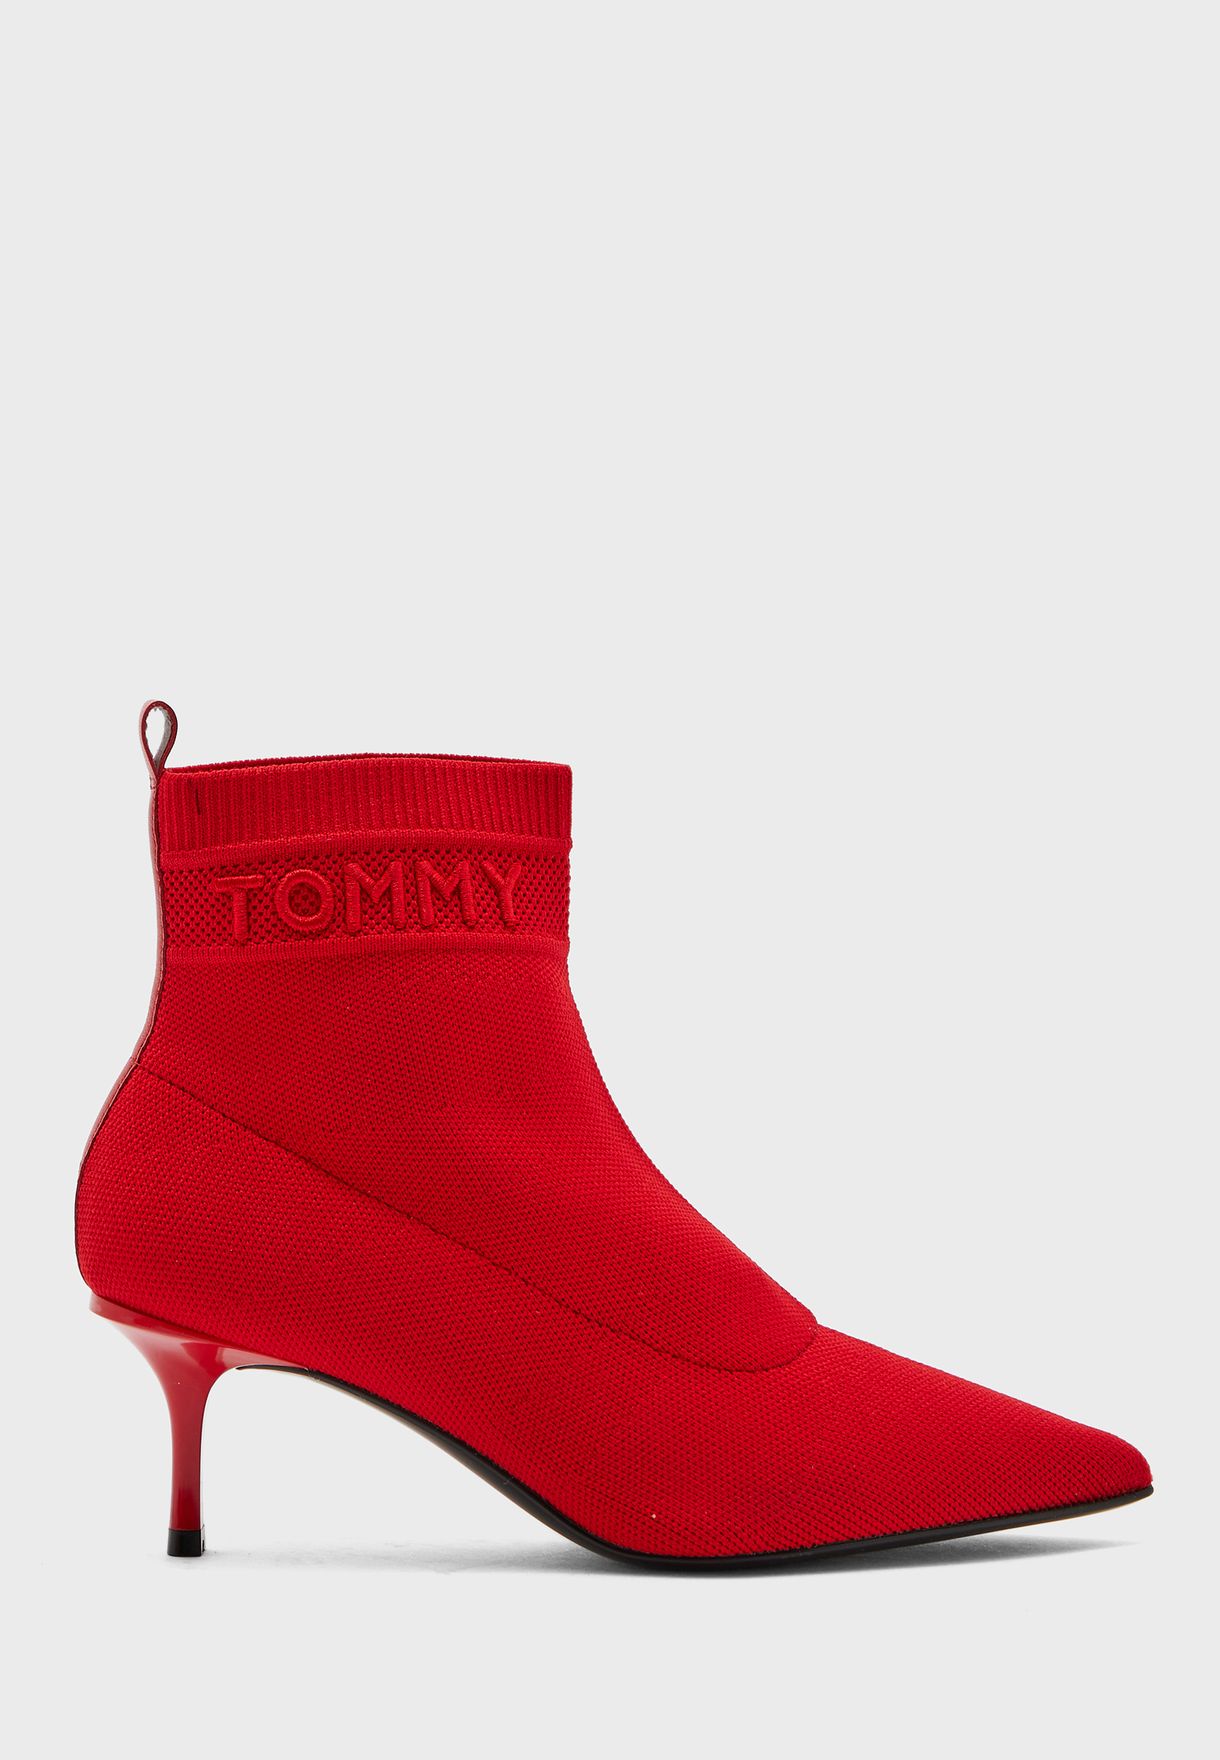 tommy hilfiger red heels